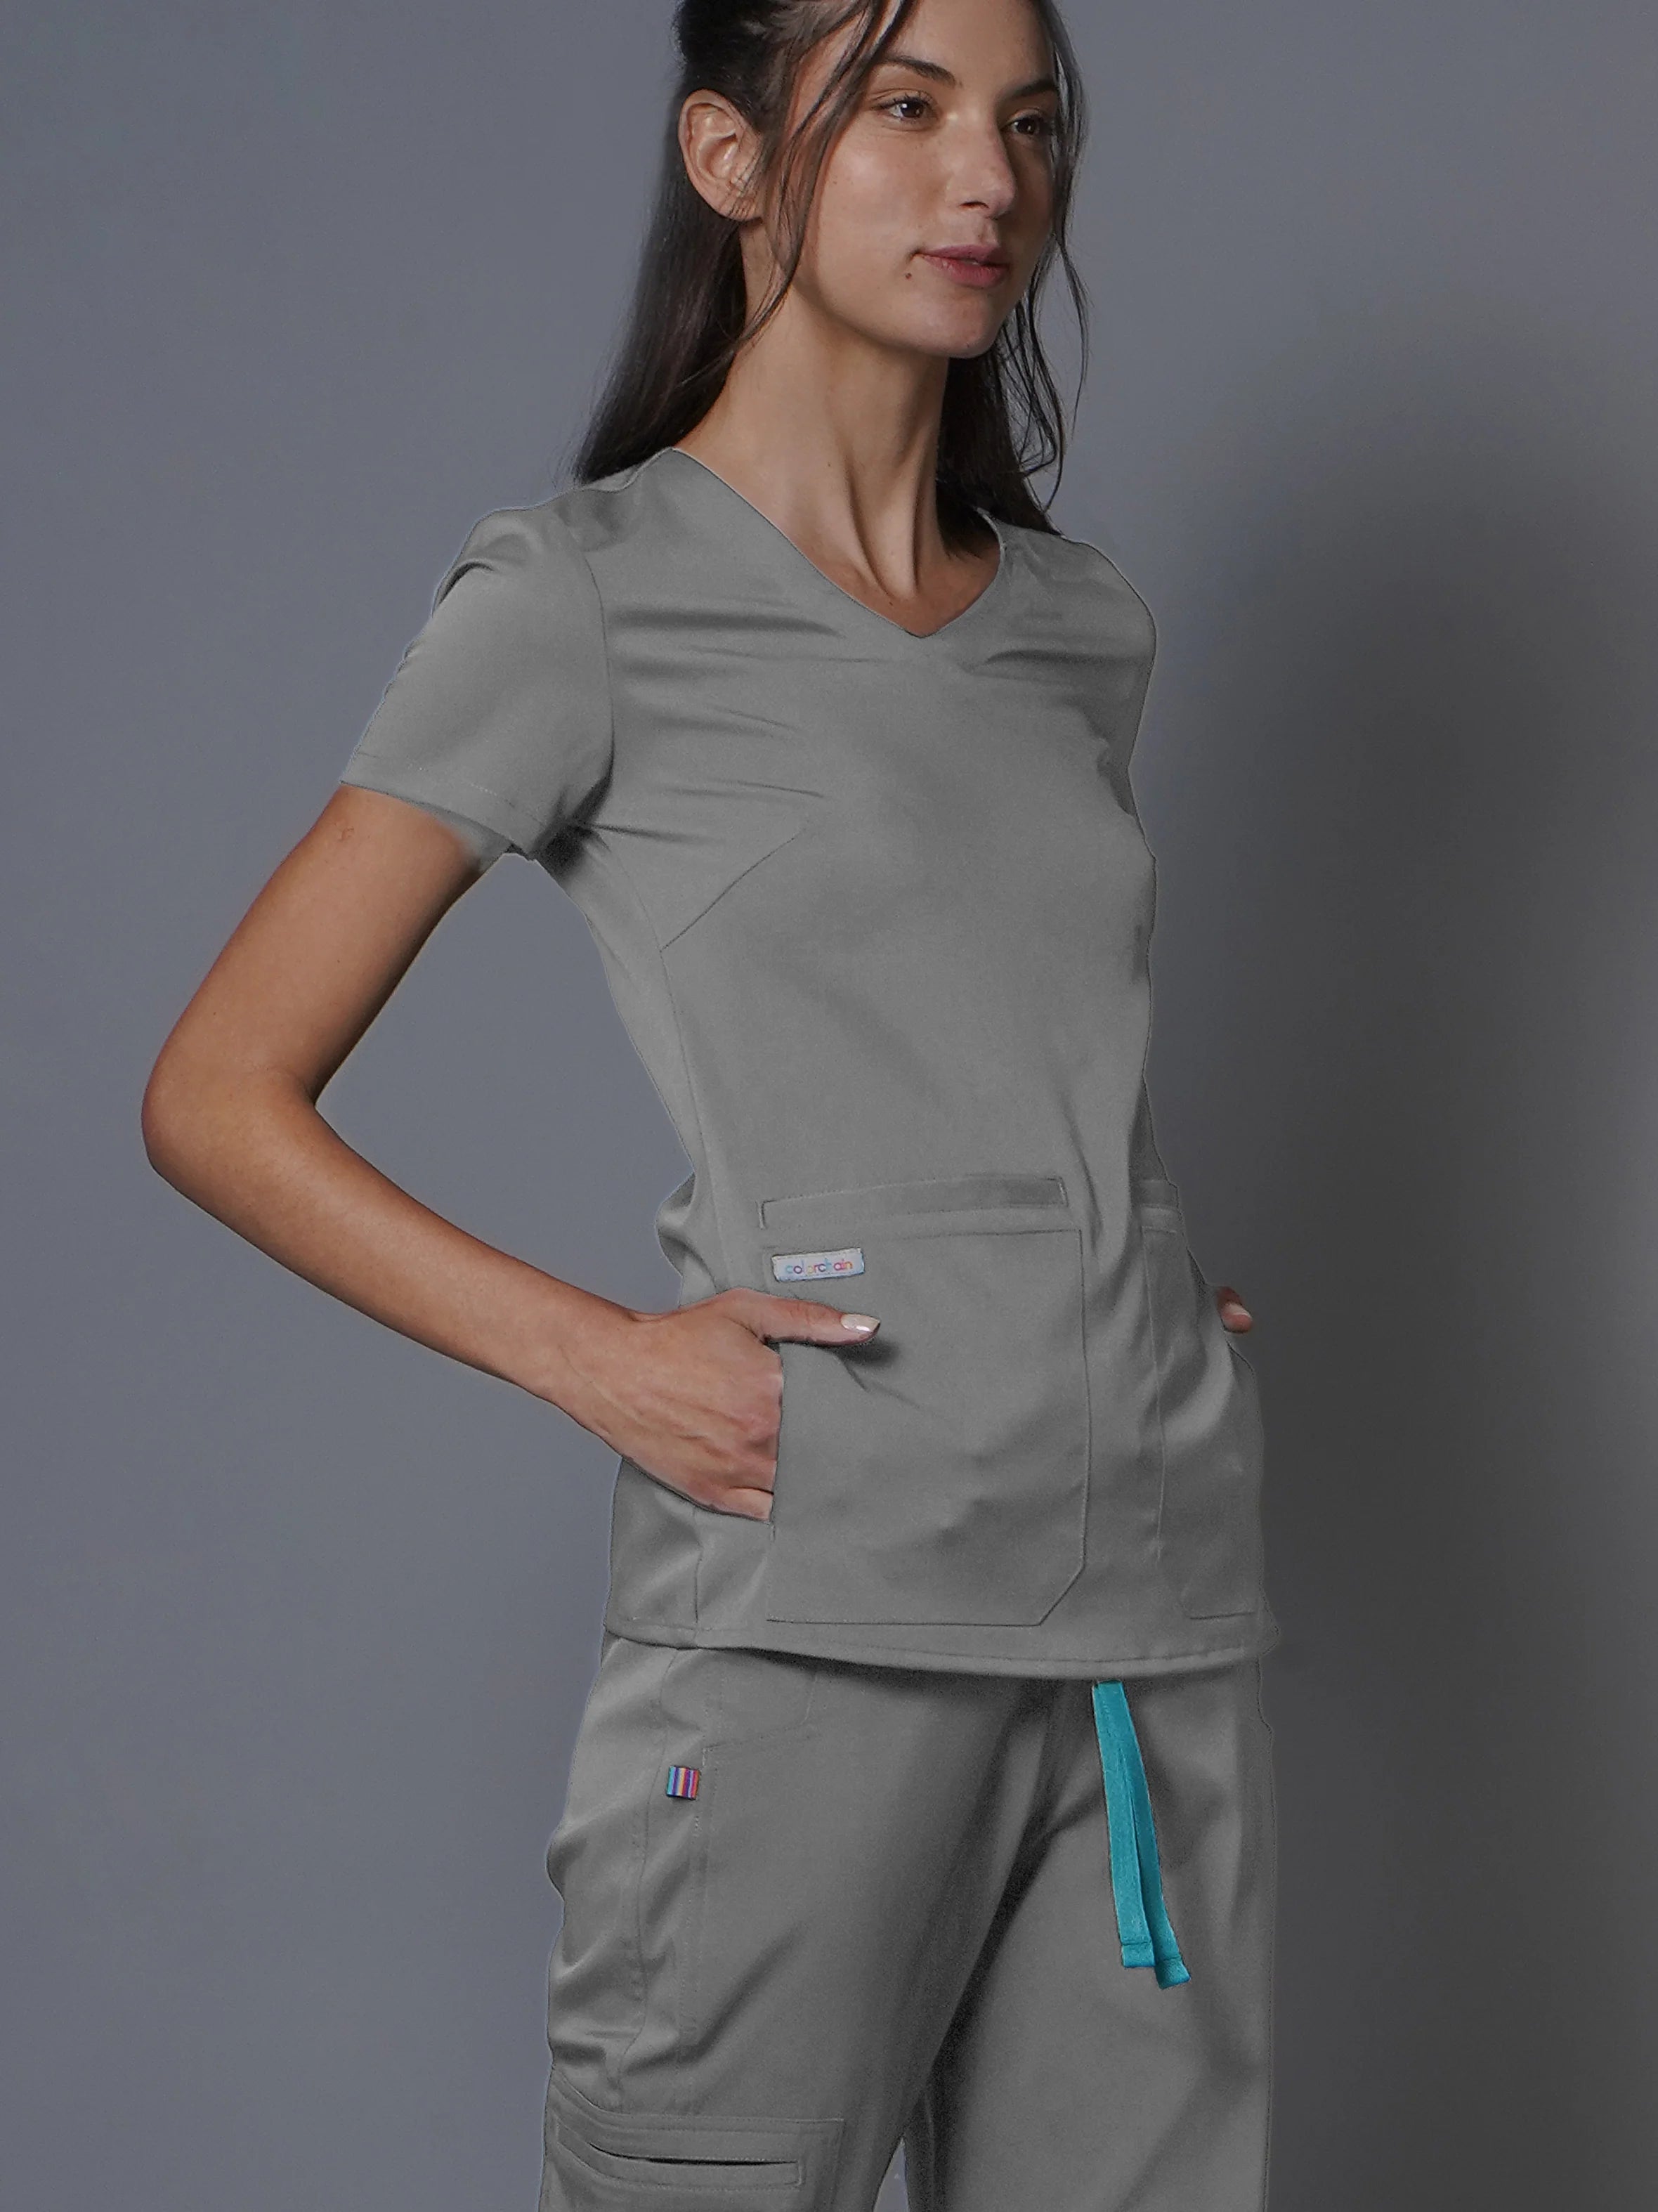 Top Copacabana Cemento. Top uniforme médico para mujer. 